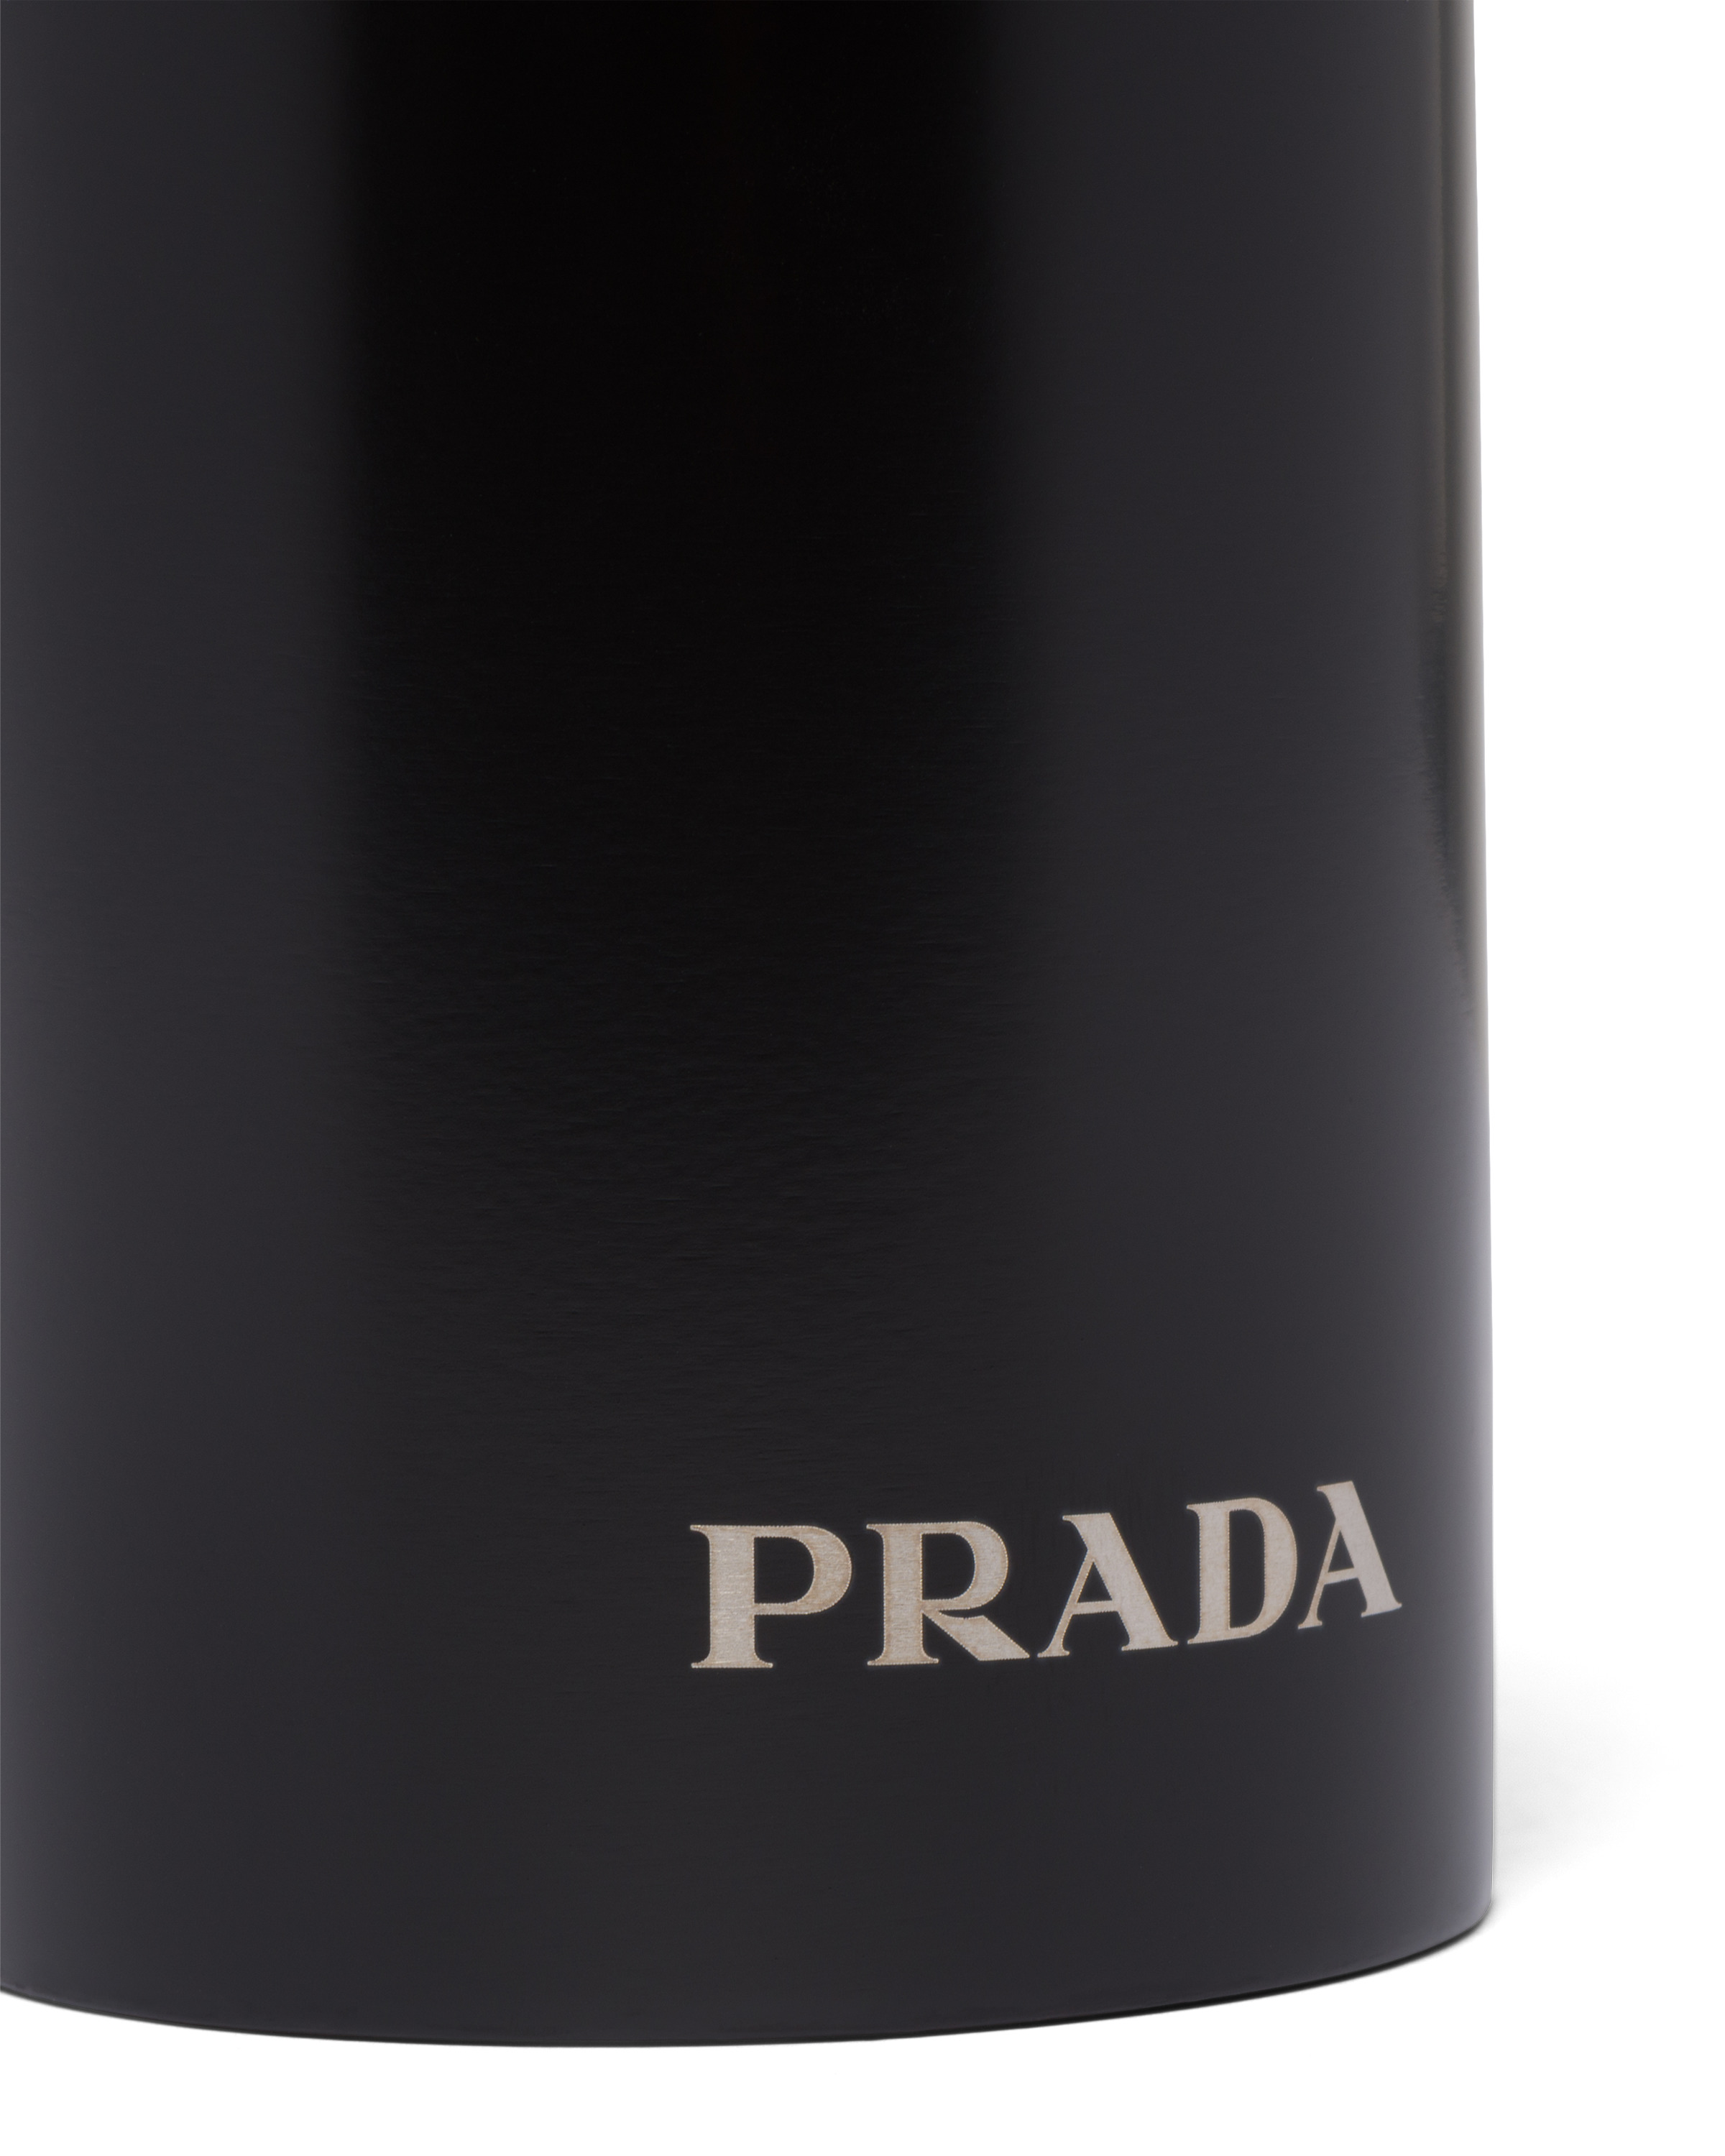 Prada Stainless steel insulated water bottle, 350 ml | REVERSIBLE